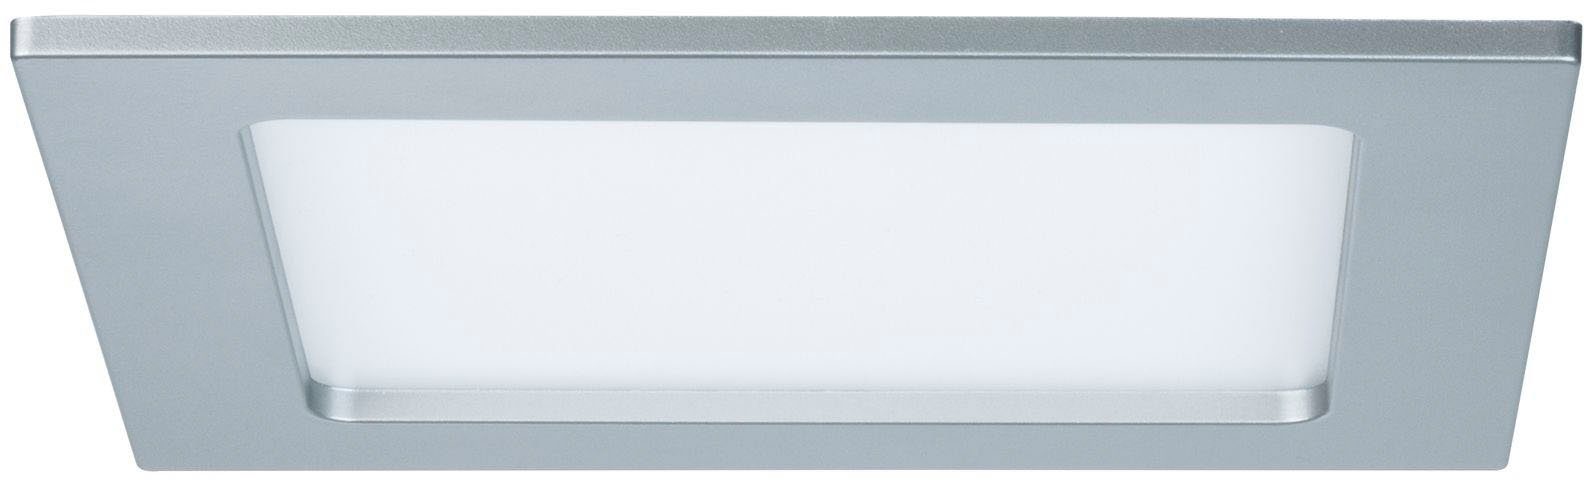 Paulmann LED Panel LED Einbaupanel eckig 165x165mm 12W 4.000K Chrom matt, LED  fest integriert, Neutralweiß, LED Einbaupanel eckig 165x165mm 12W 4.000K  Chrom matt, Satiniertes Schutzglas